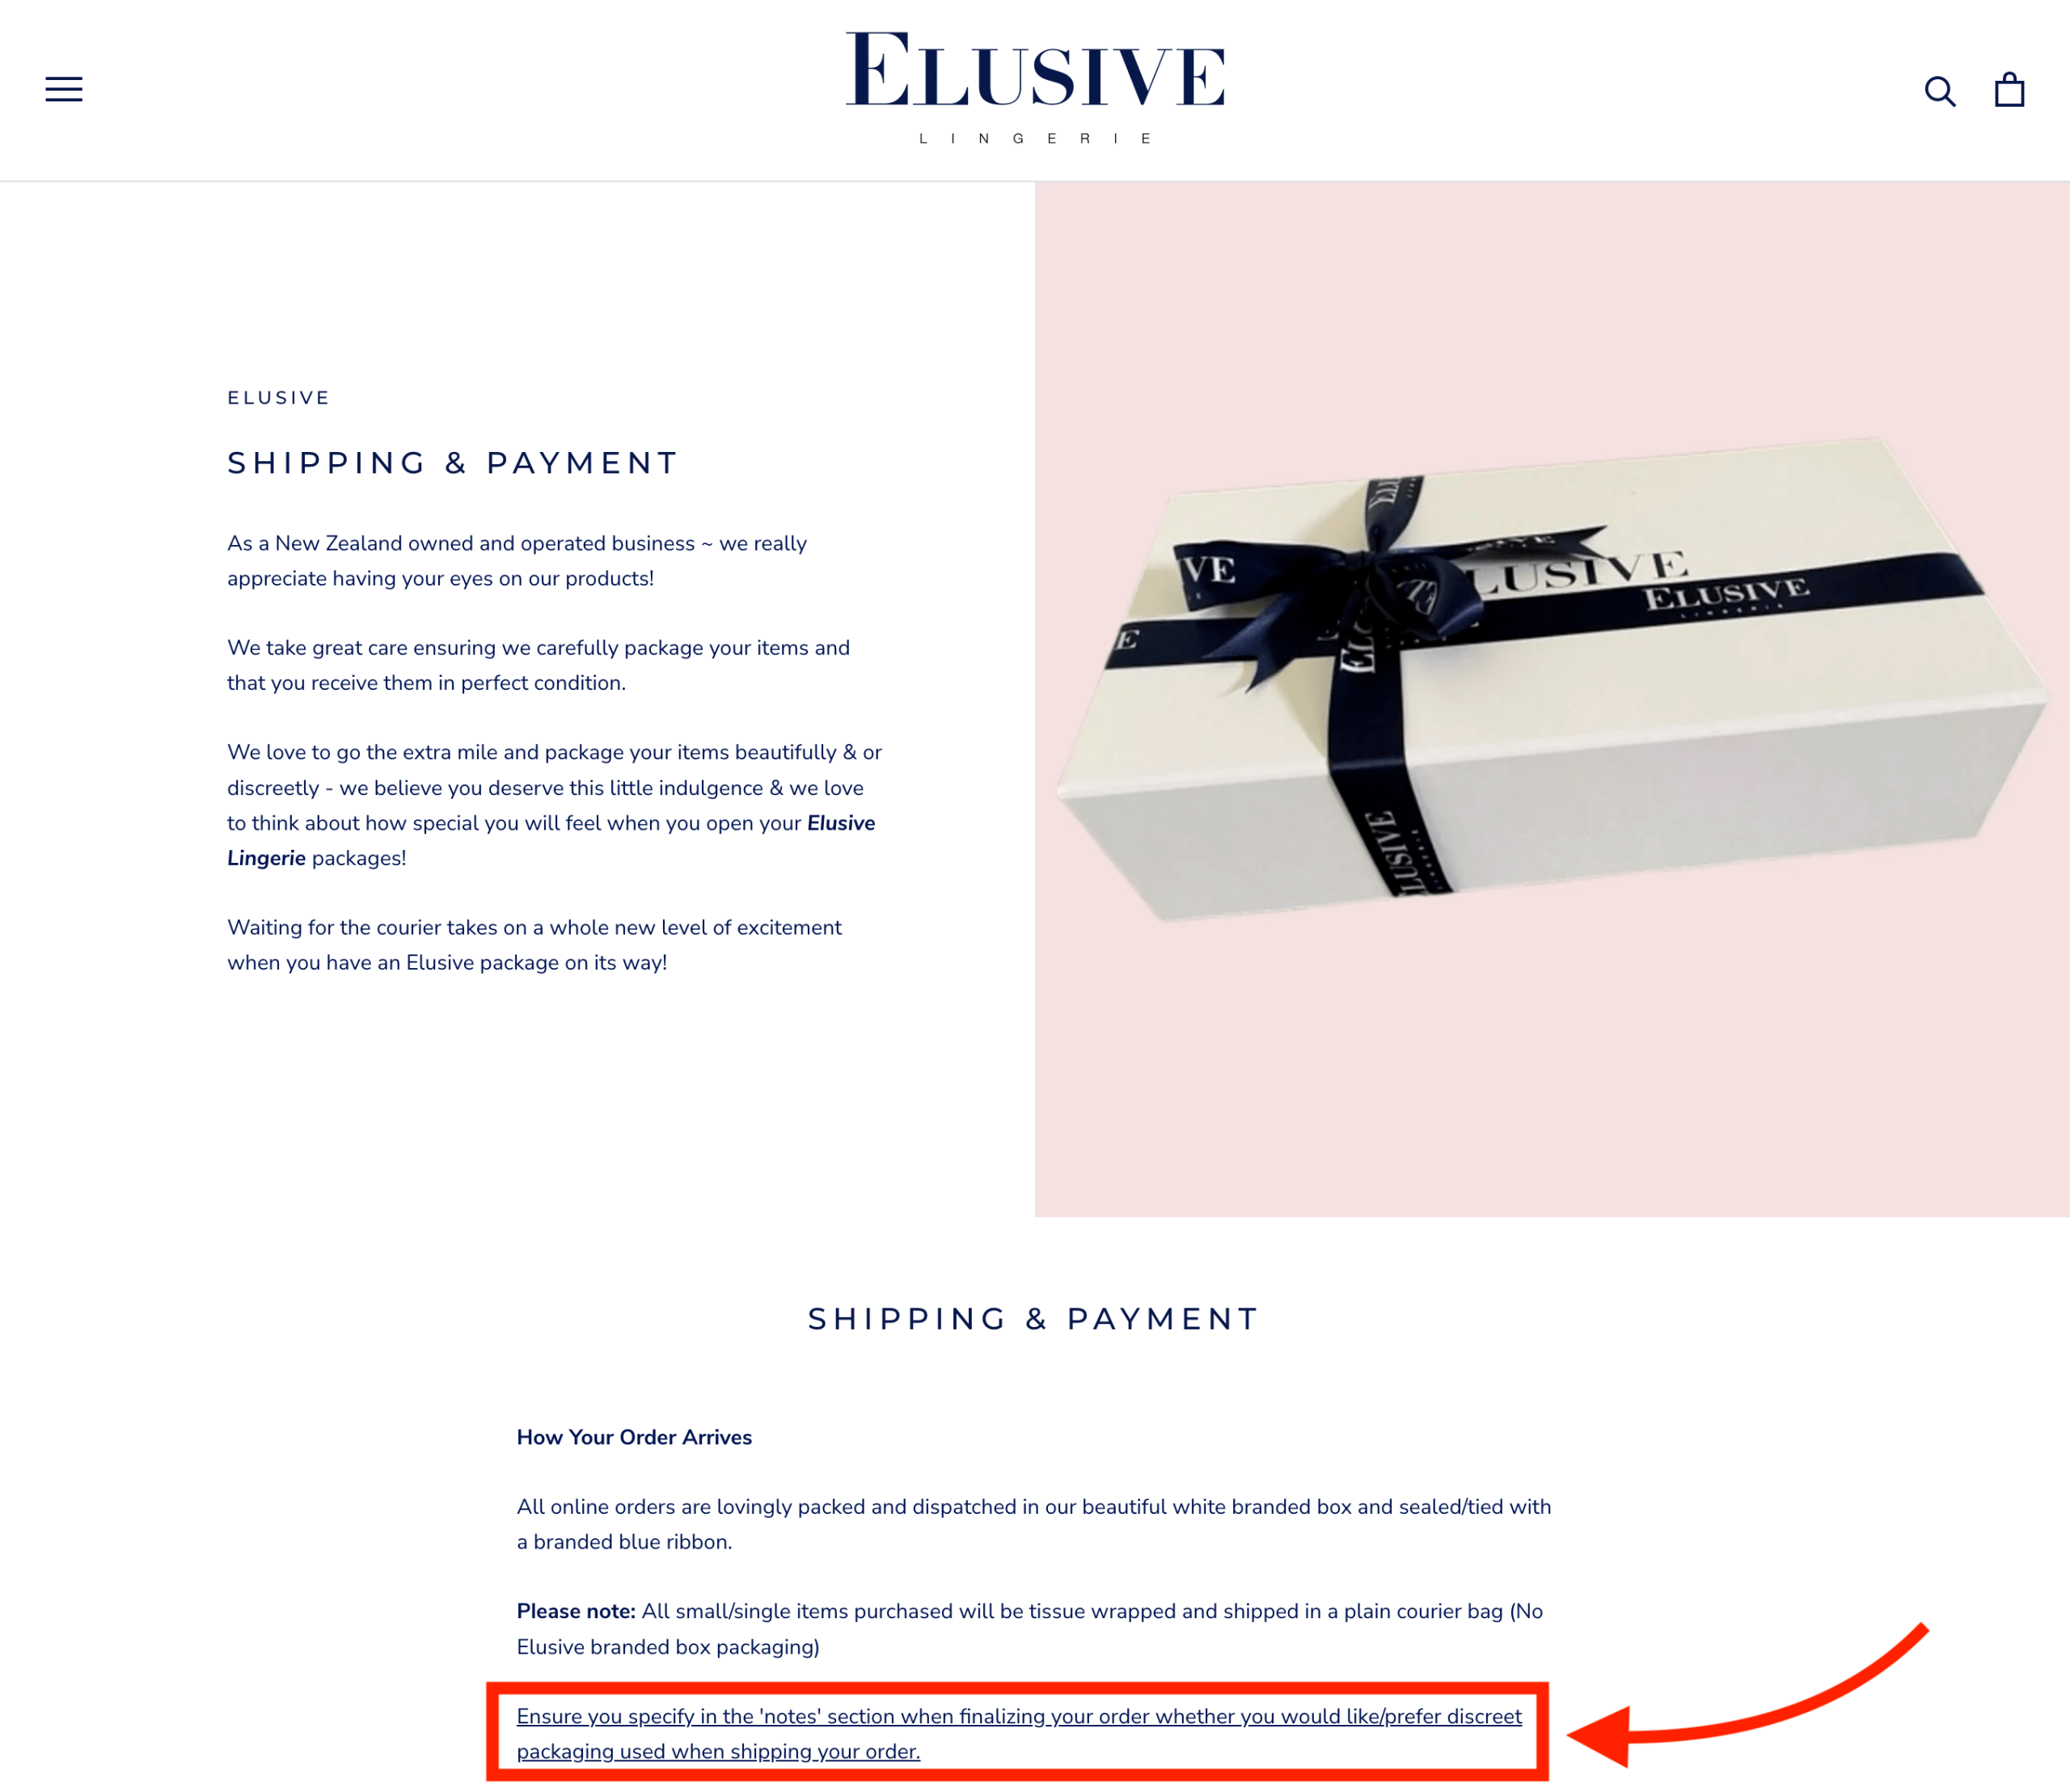 Elusive ecommerce brand option for discreet shipping plain white branded box